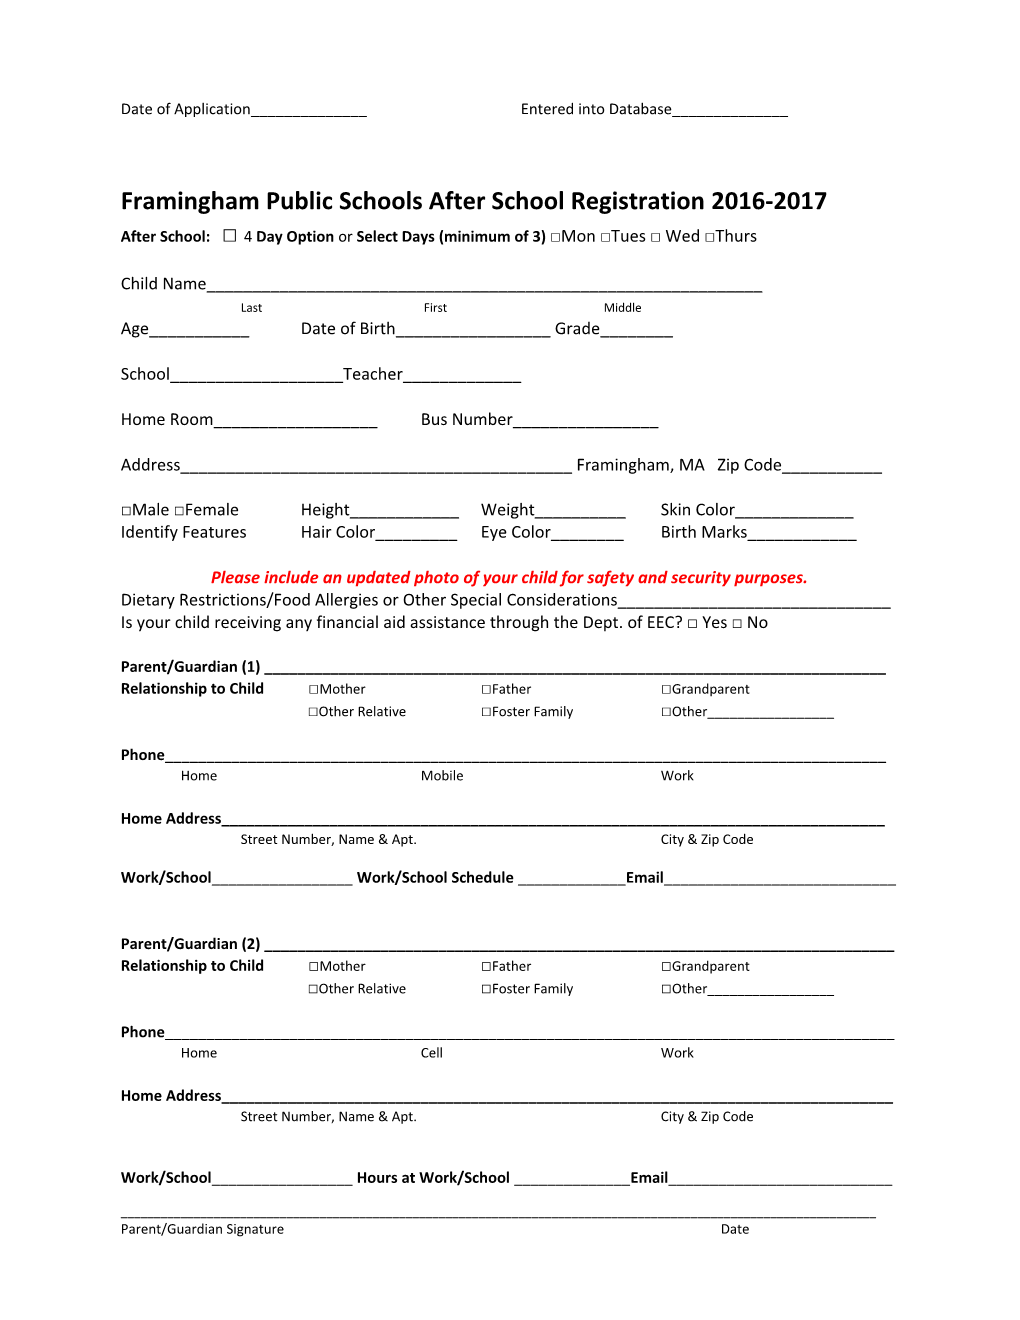 Framingham Public Schools After School Registration 2016-2017